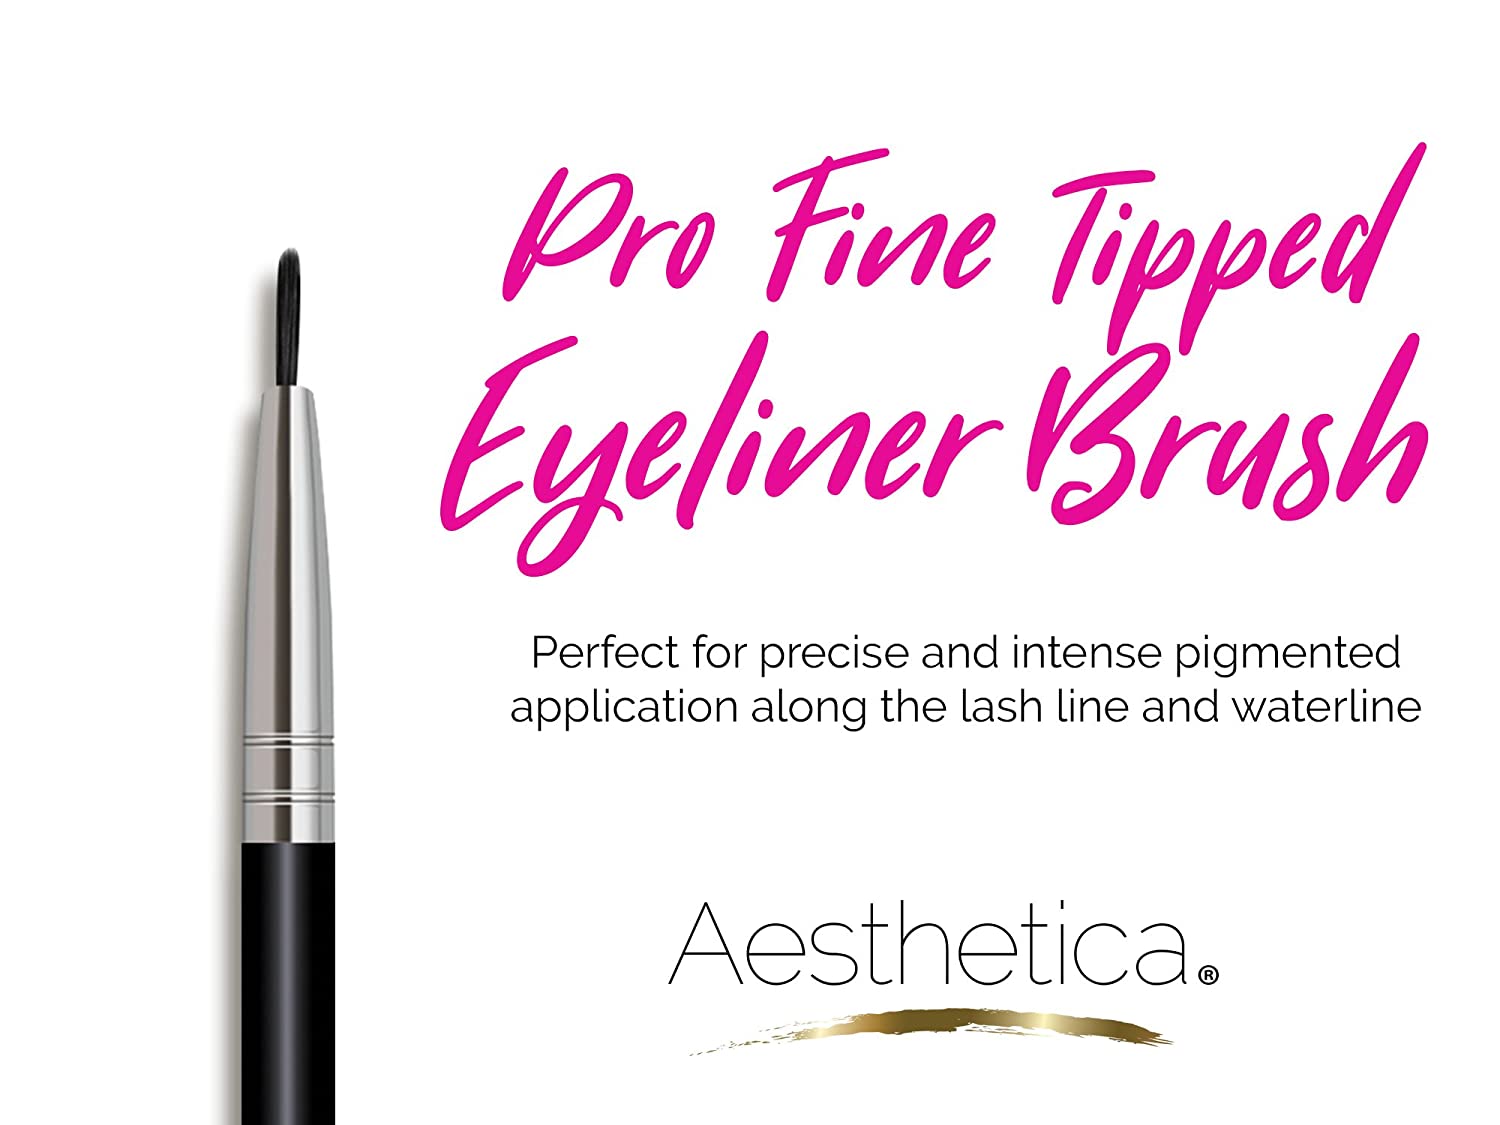 Aesthetica Pro Brush Series 3-Piece Eyeliner, Brow & Spoolie Brush Set